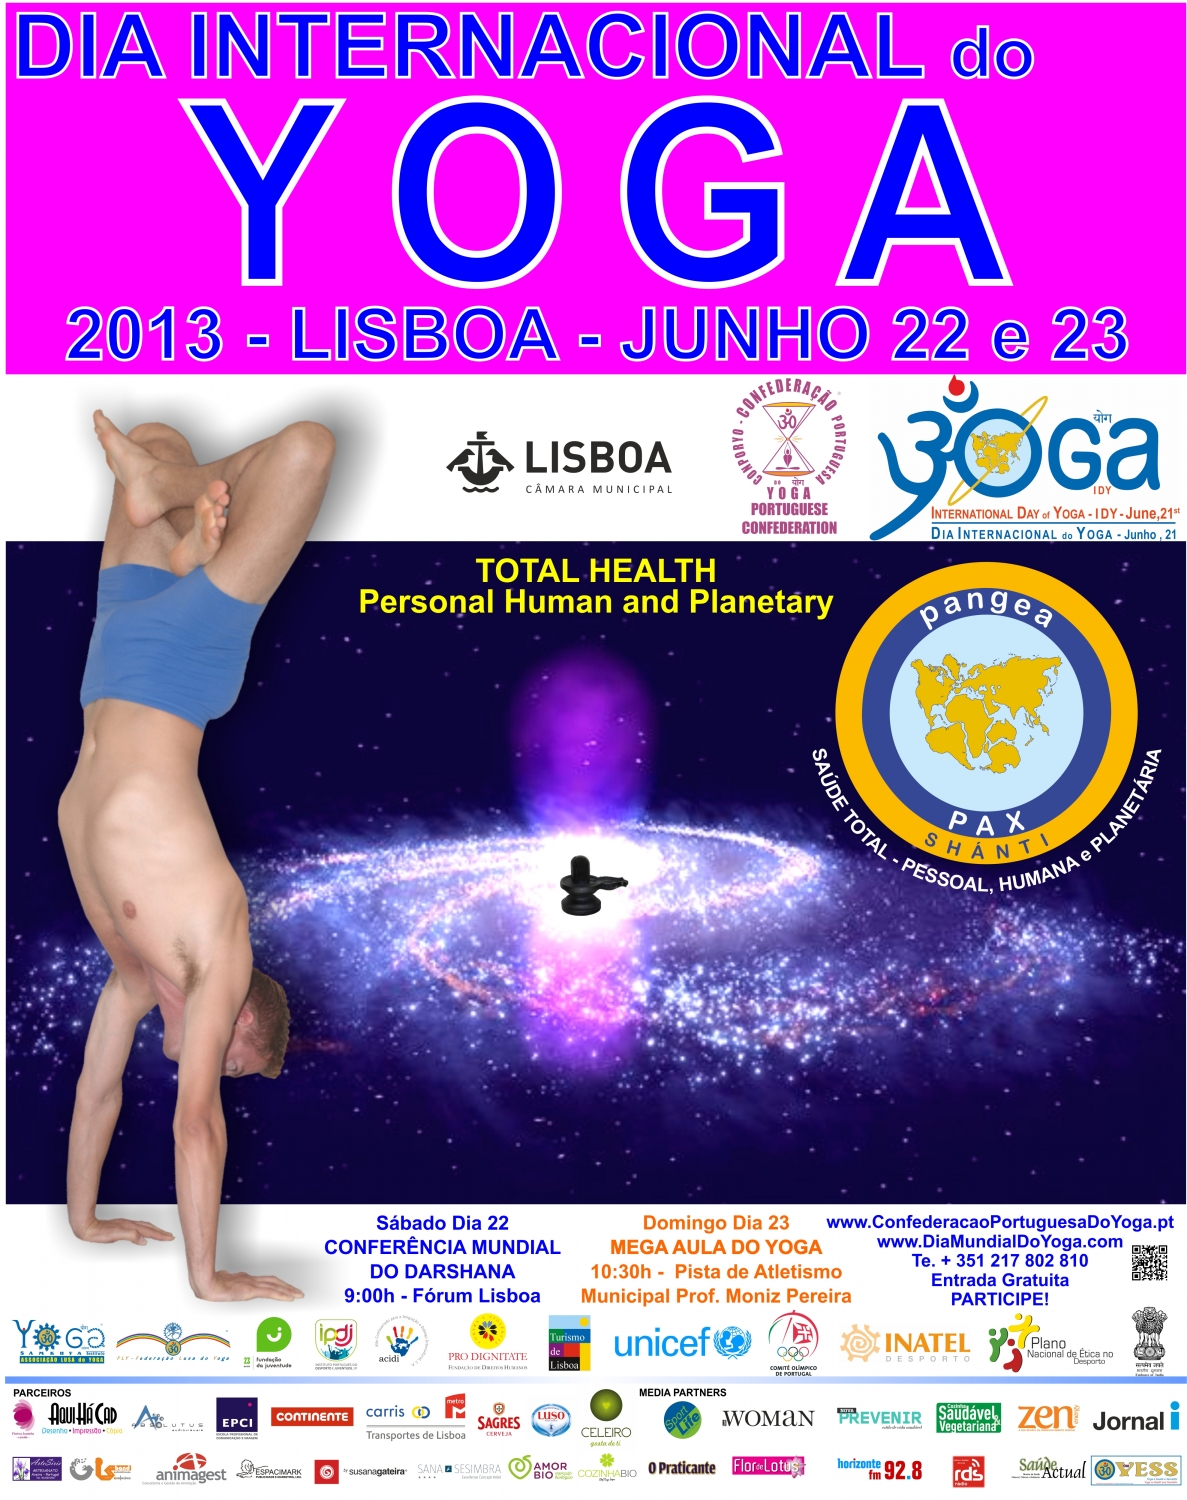 International Day of Yoga - IDY - 2013, Lisboa